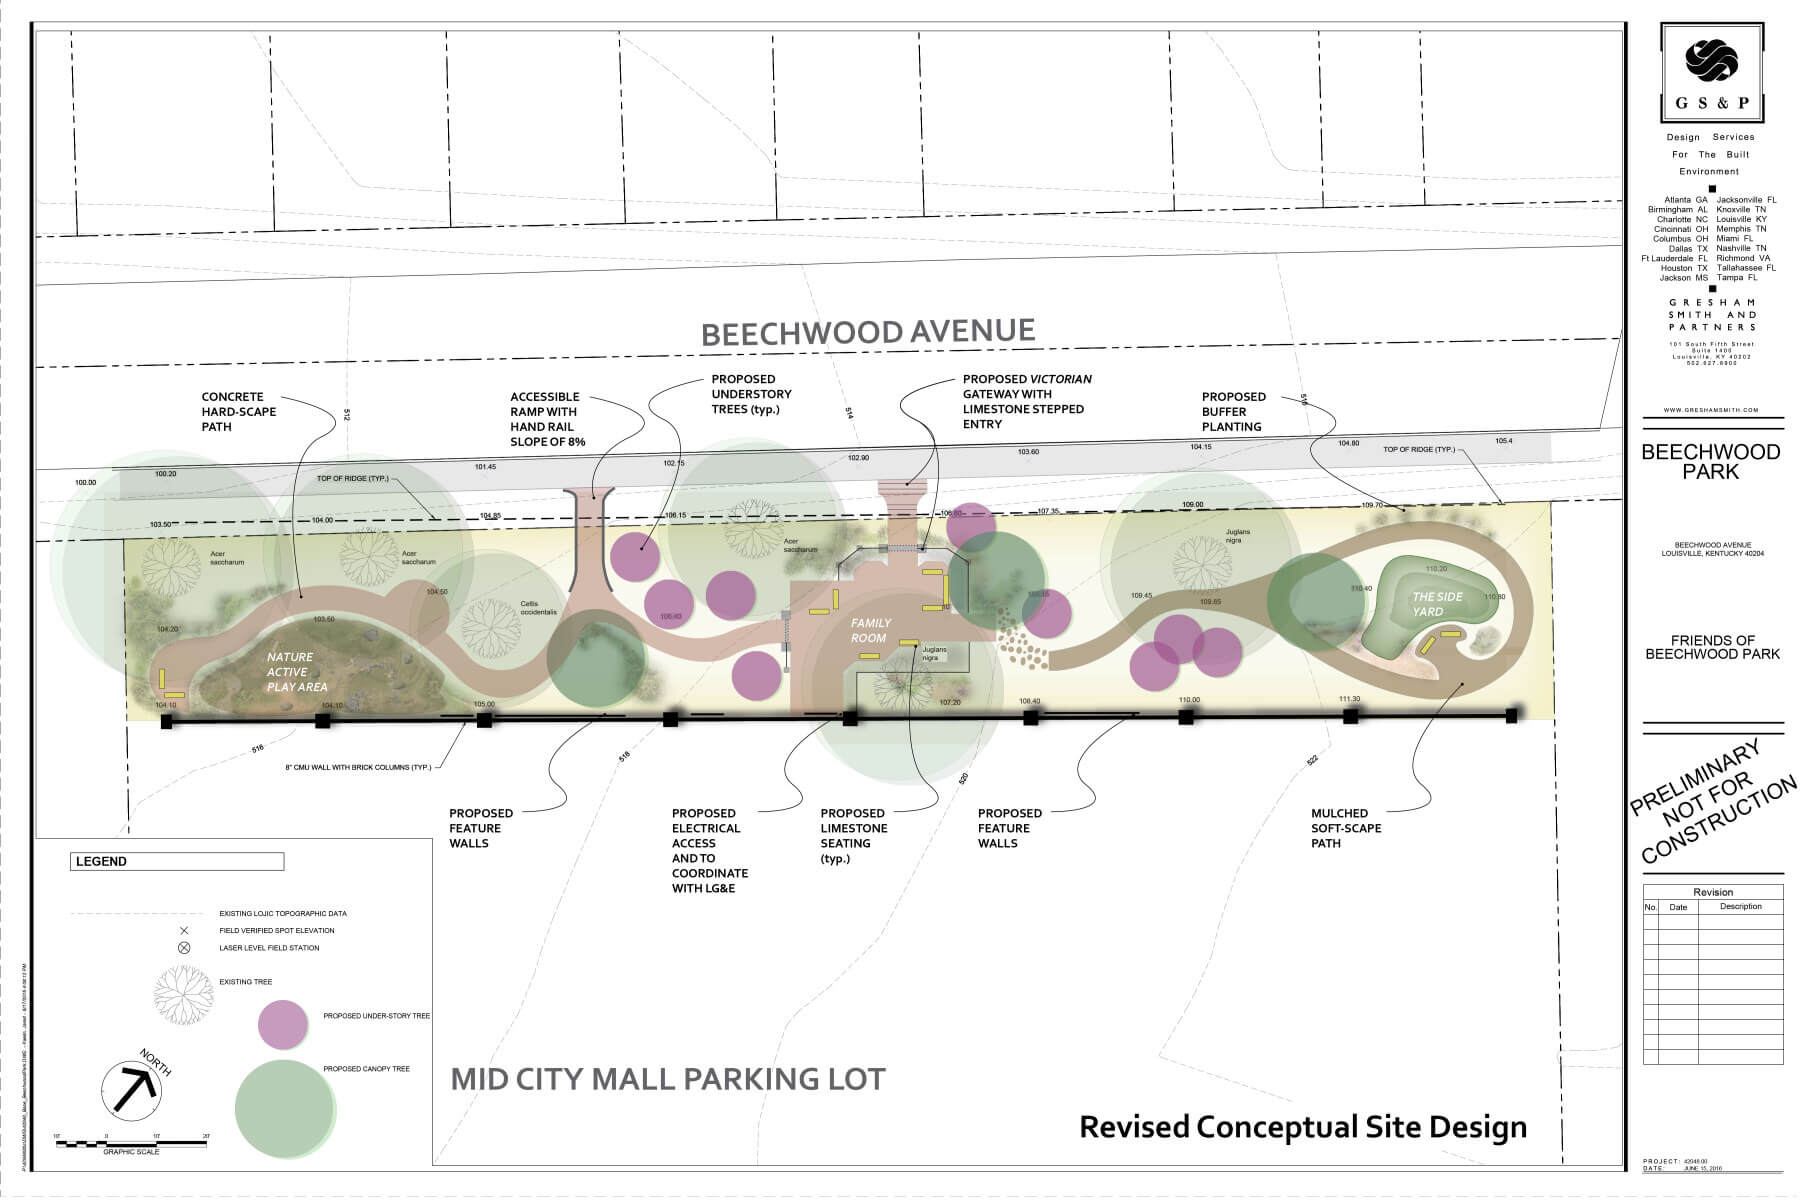 Final conceptual site design of Beechwood Park